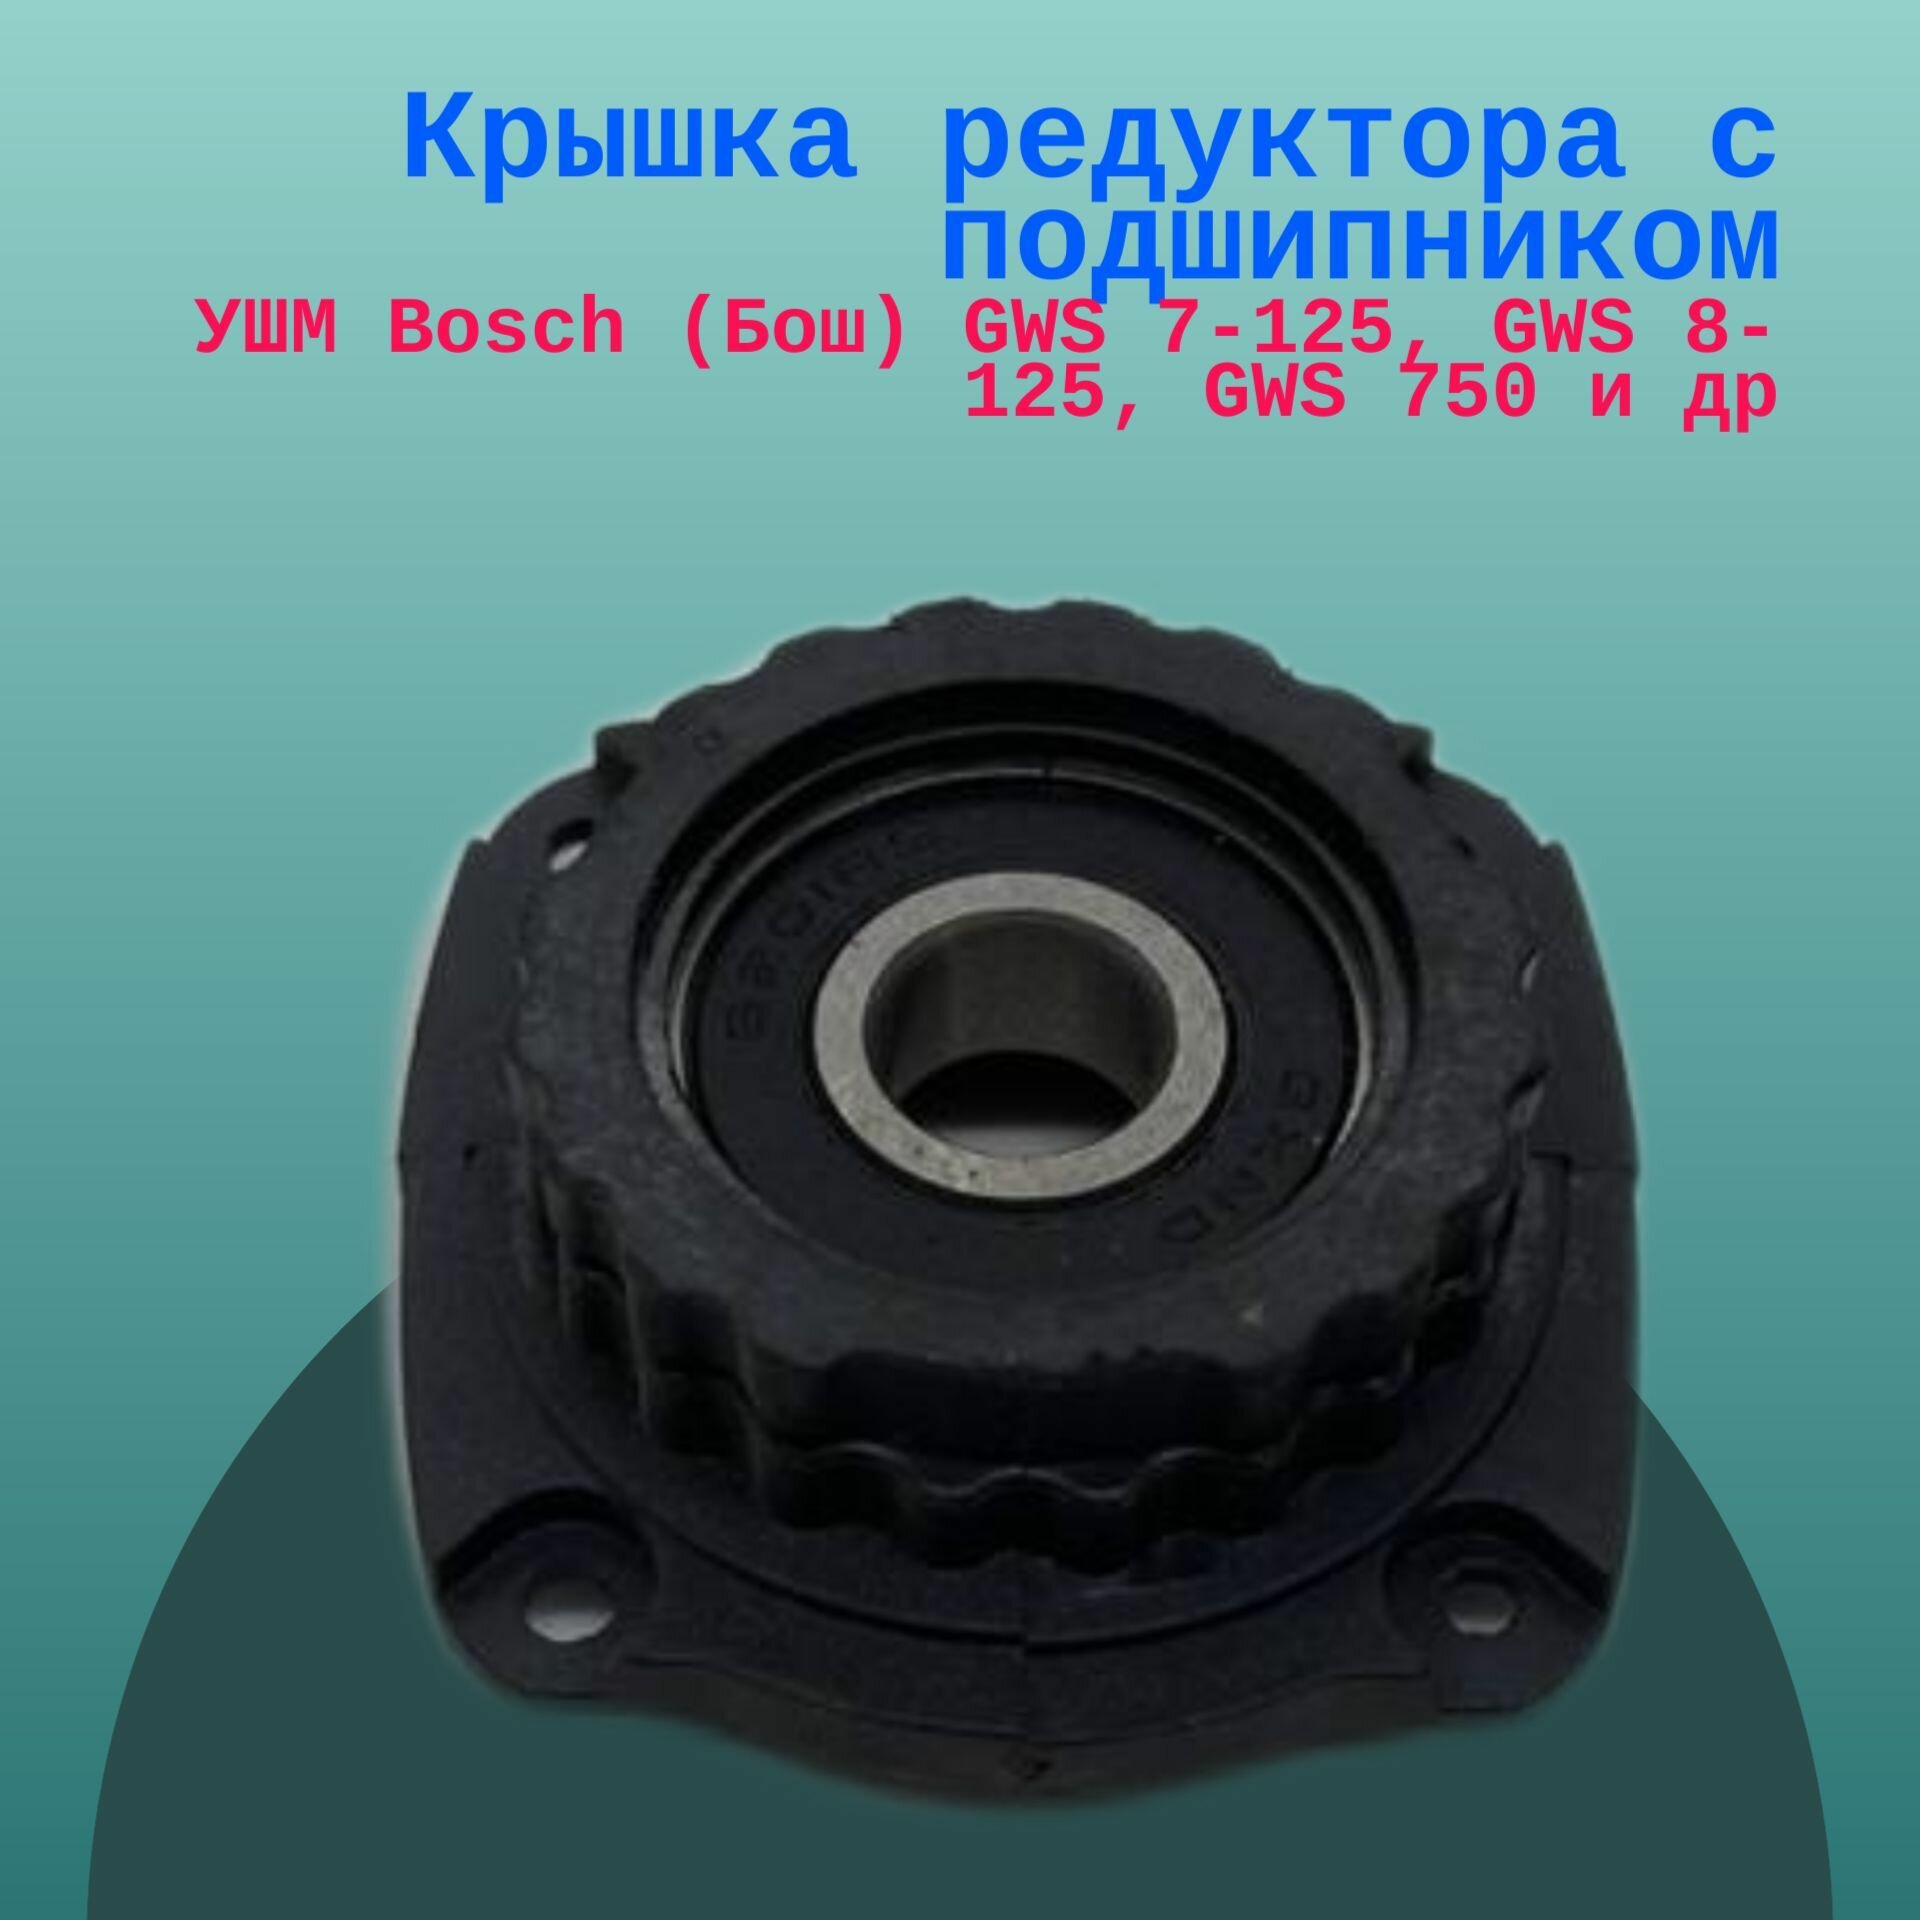 Крышка редуктора с подшипником (фланец корпуса редуктора) для болгарки УШМ Bosch (Бош) GWS 7-125, GWS 8-125, GWS 750 и др.